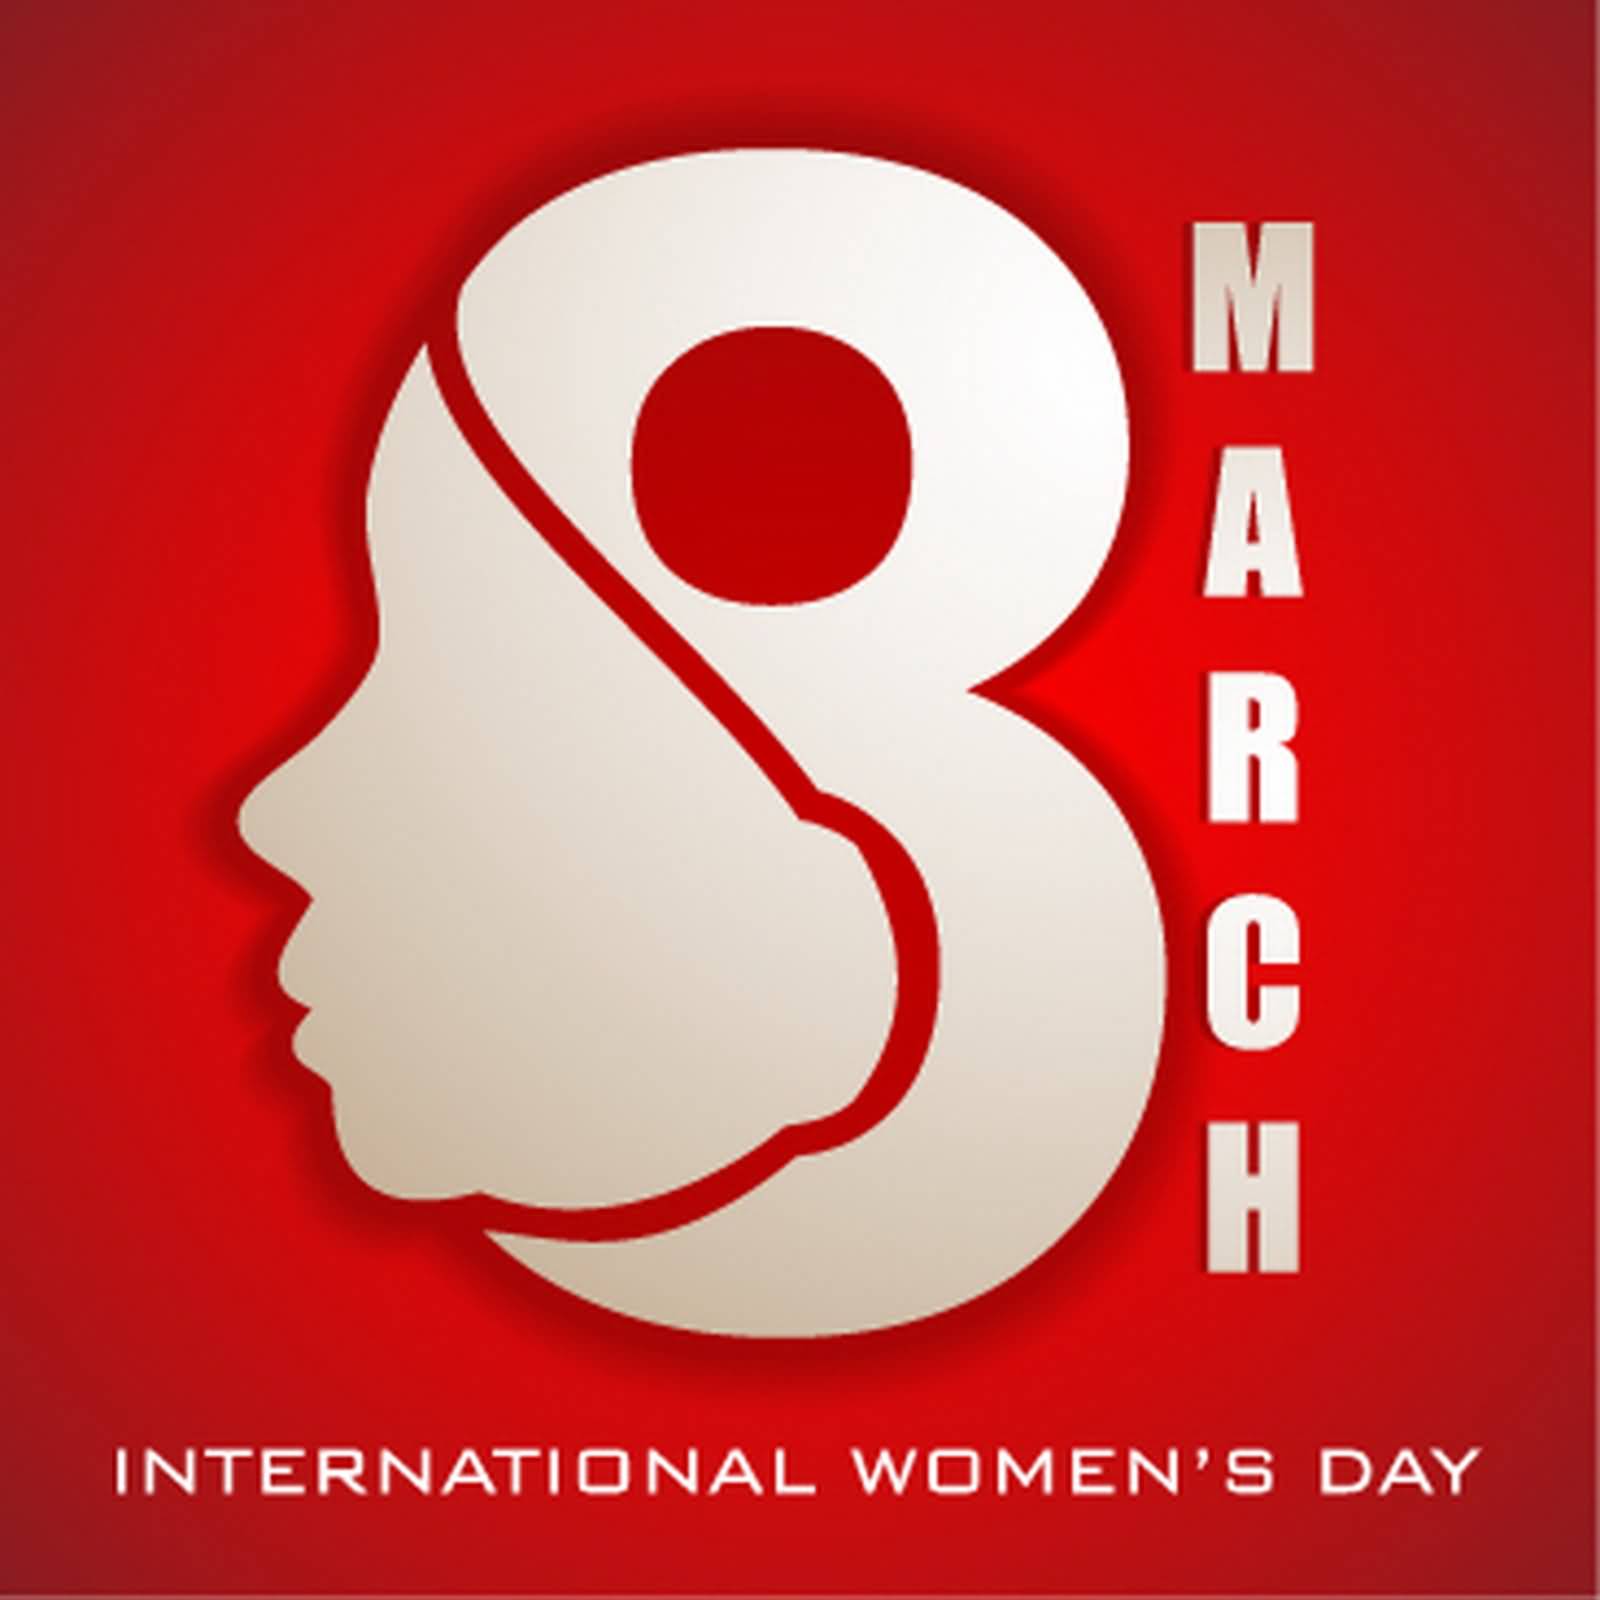 8 March Internatinal Women’s Day Card